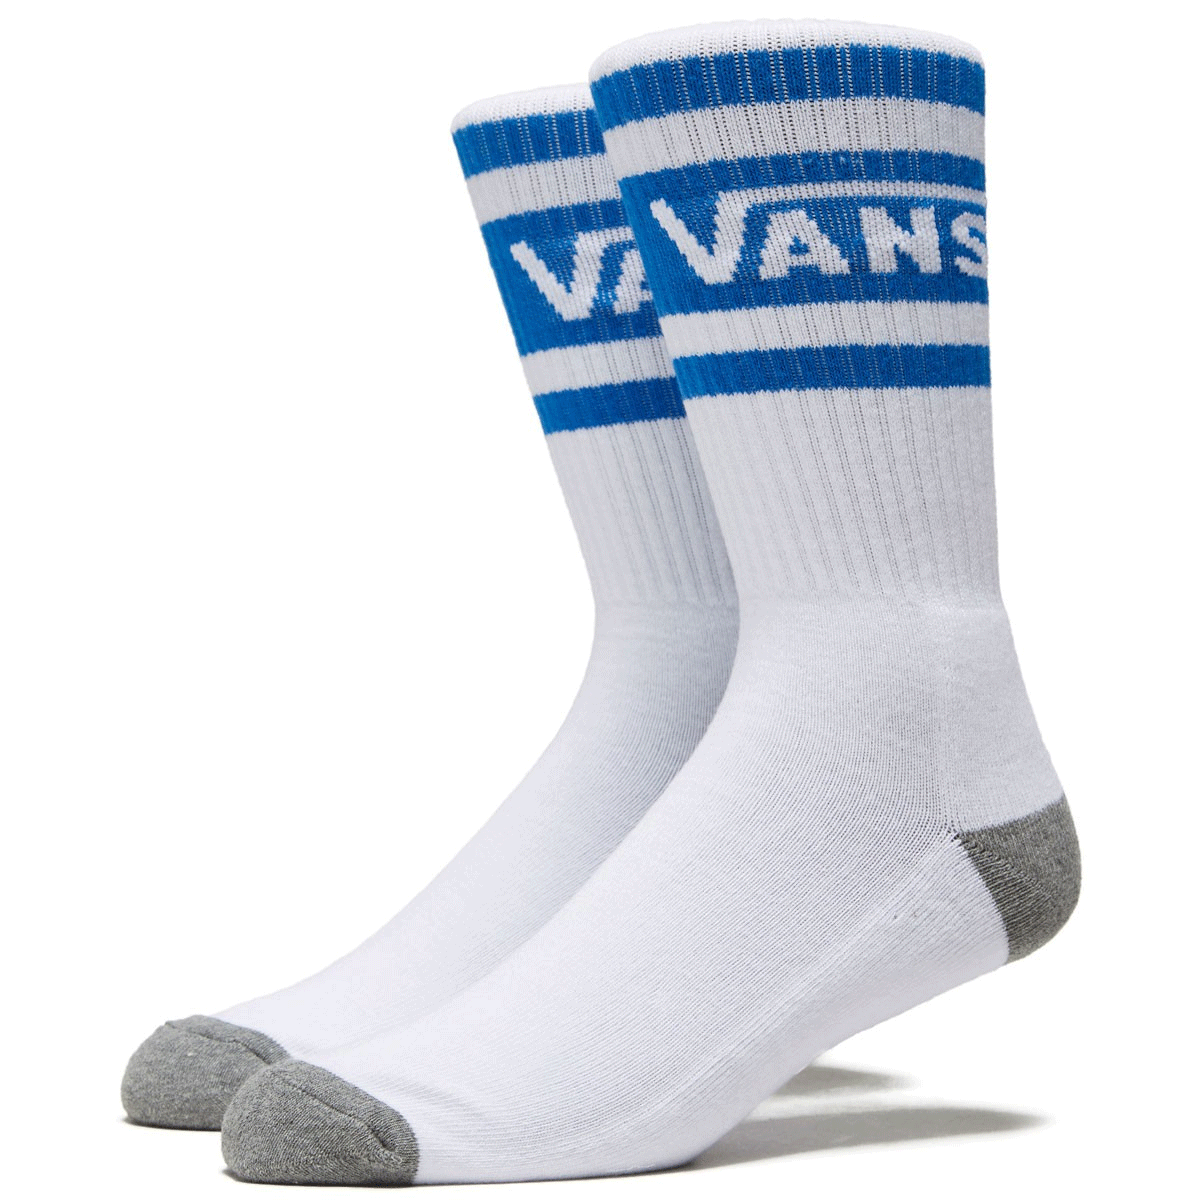 vans tribe crew socks